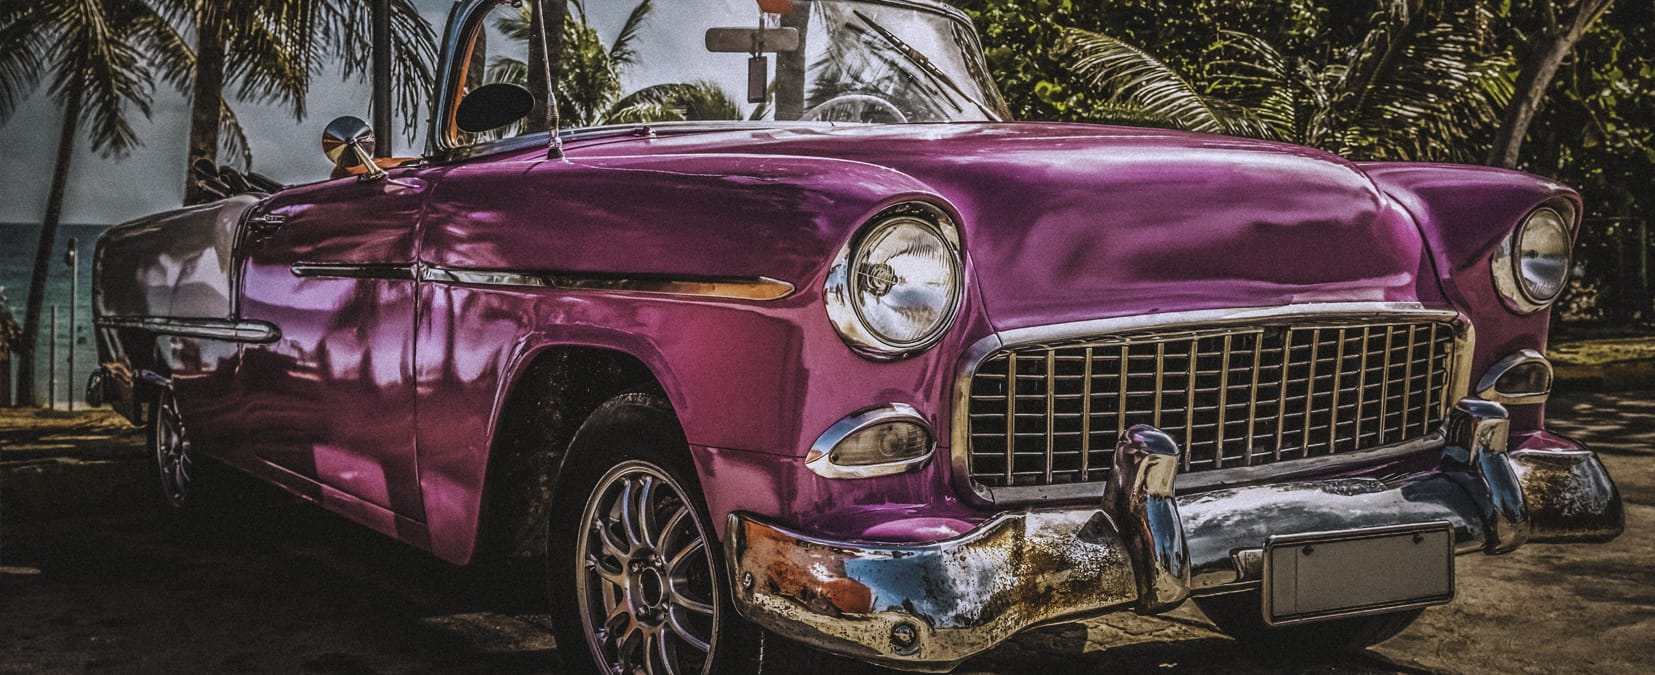 Old Car in Cuba